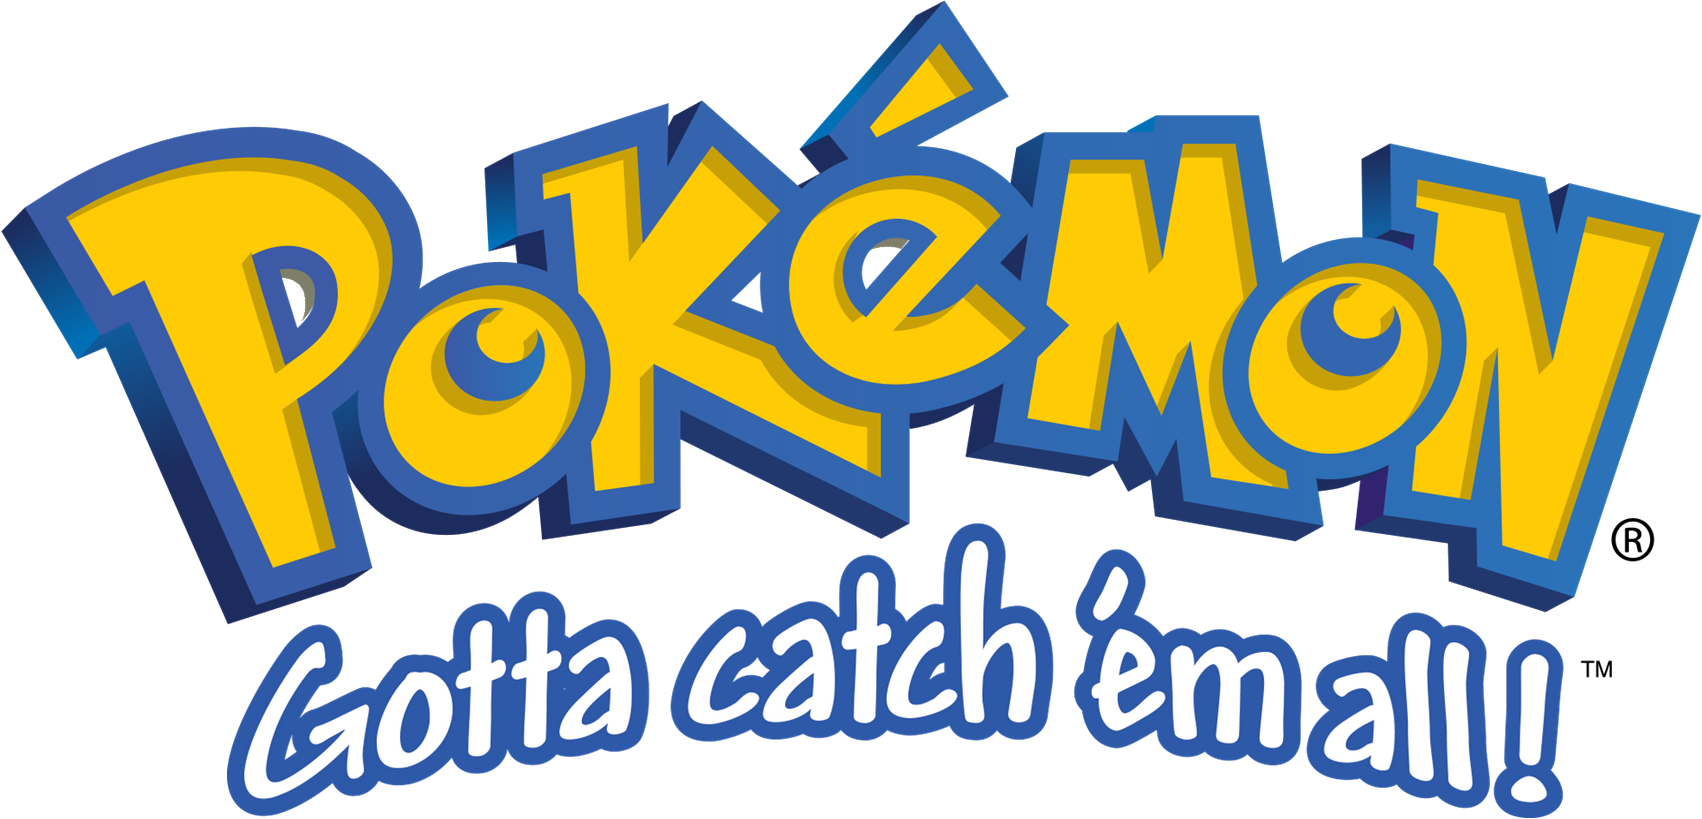 Pokemon, Gotta Catch 'em All!